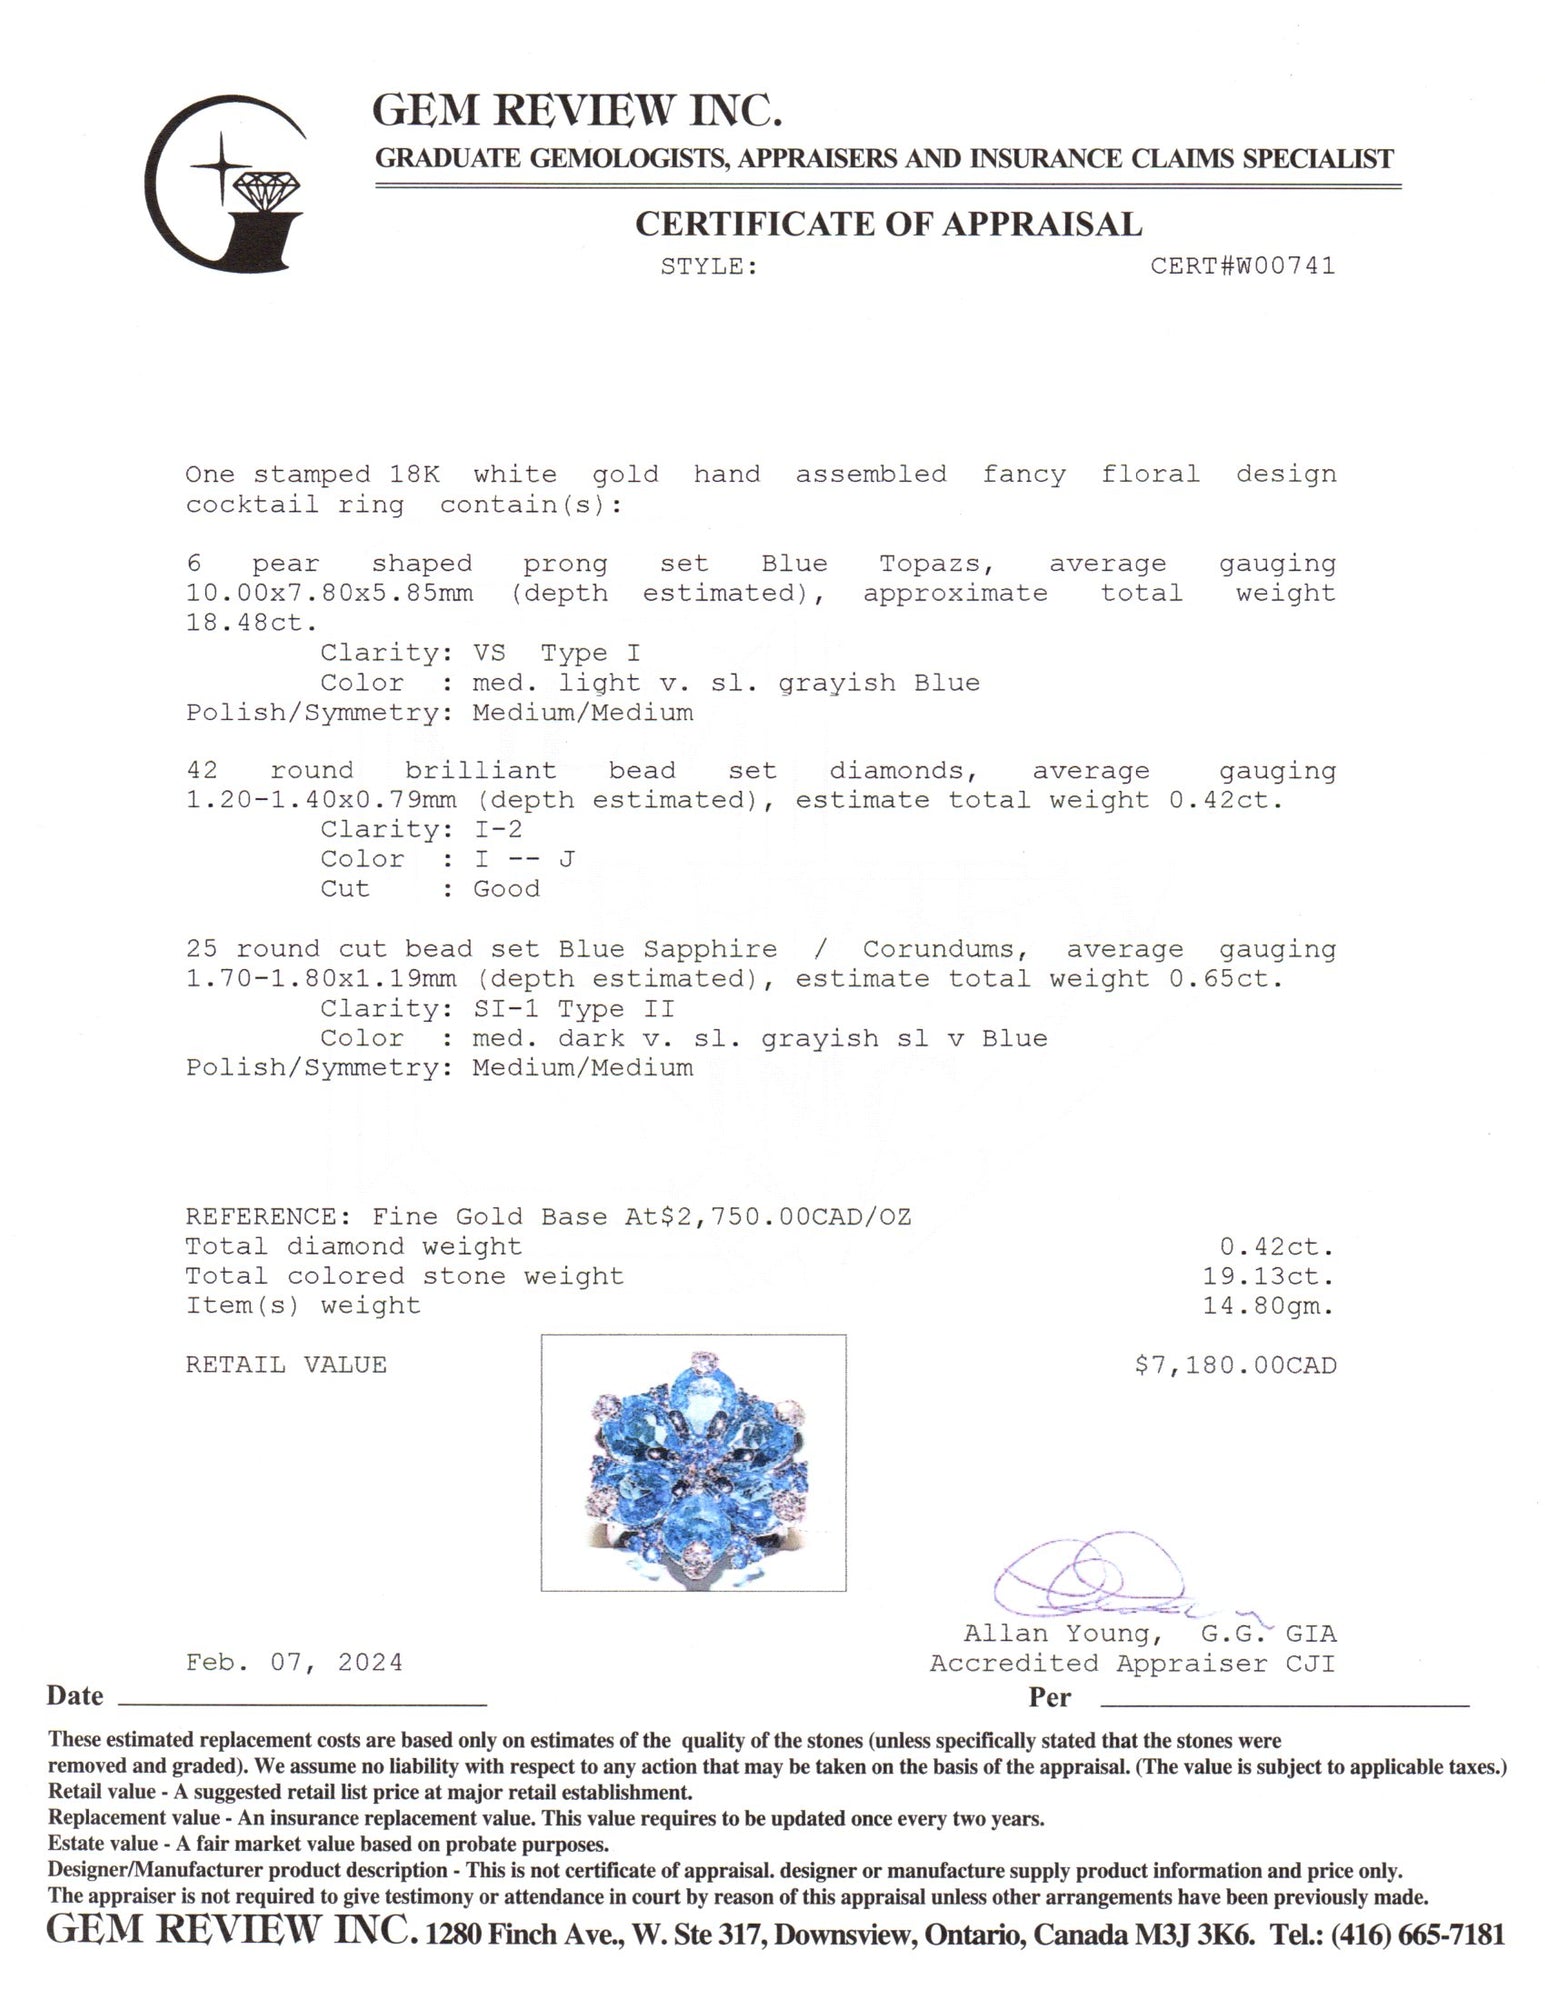 18K White Gold Blue Topaz, Sapphire, and Diamond Ring | 18.48 ctw, 0.42 ctw, 0.65 ctw | SZ 9 |